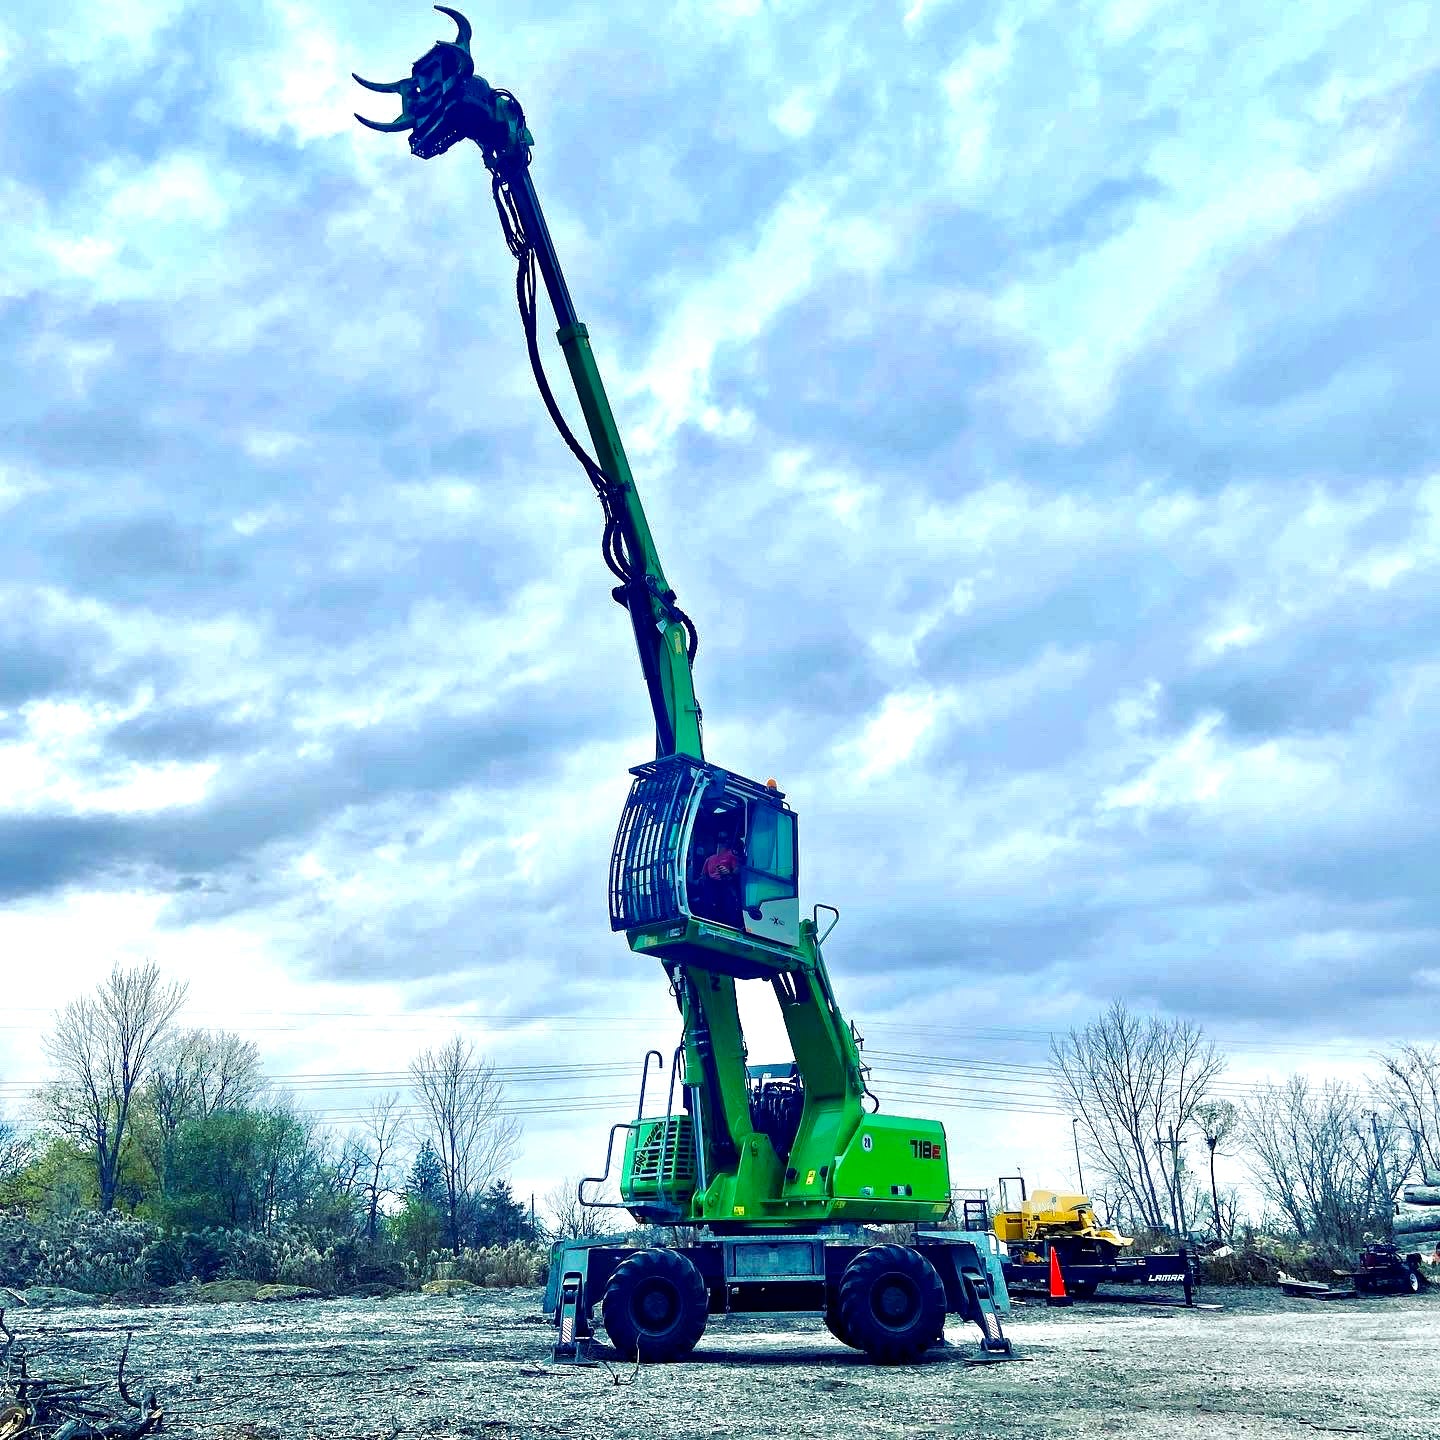 Green Sennebogen Tree Handler with Extended Crane in Action